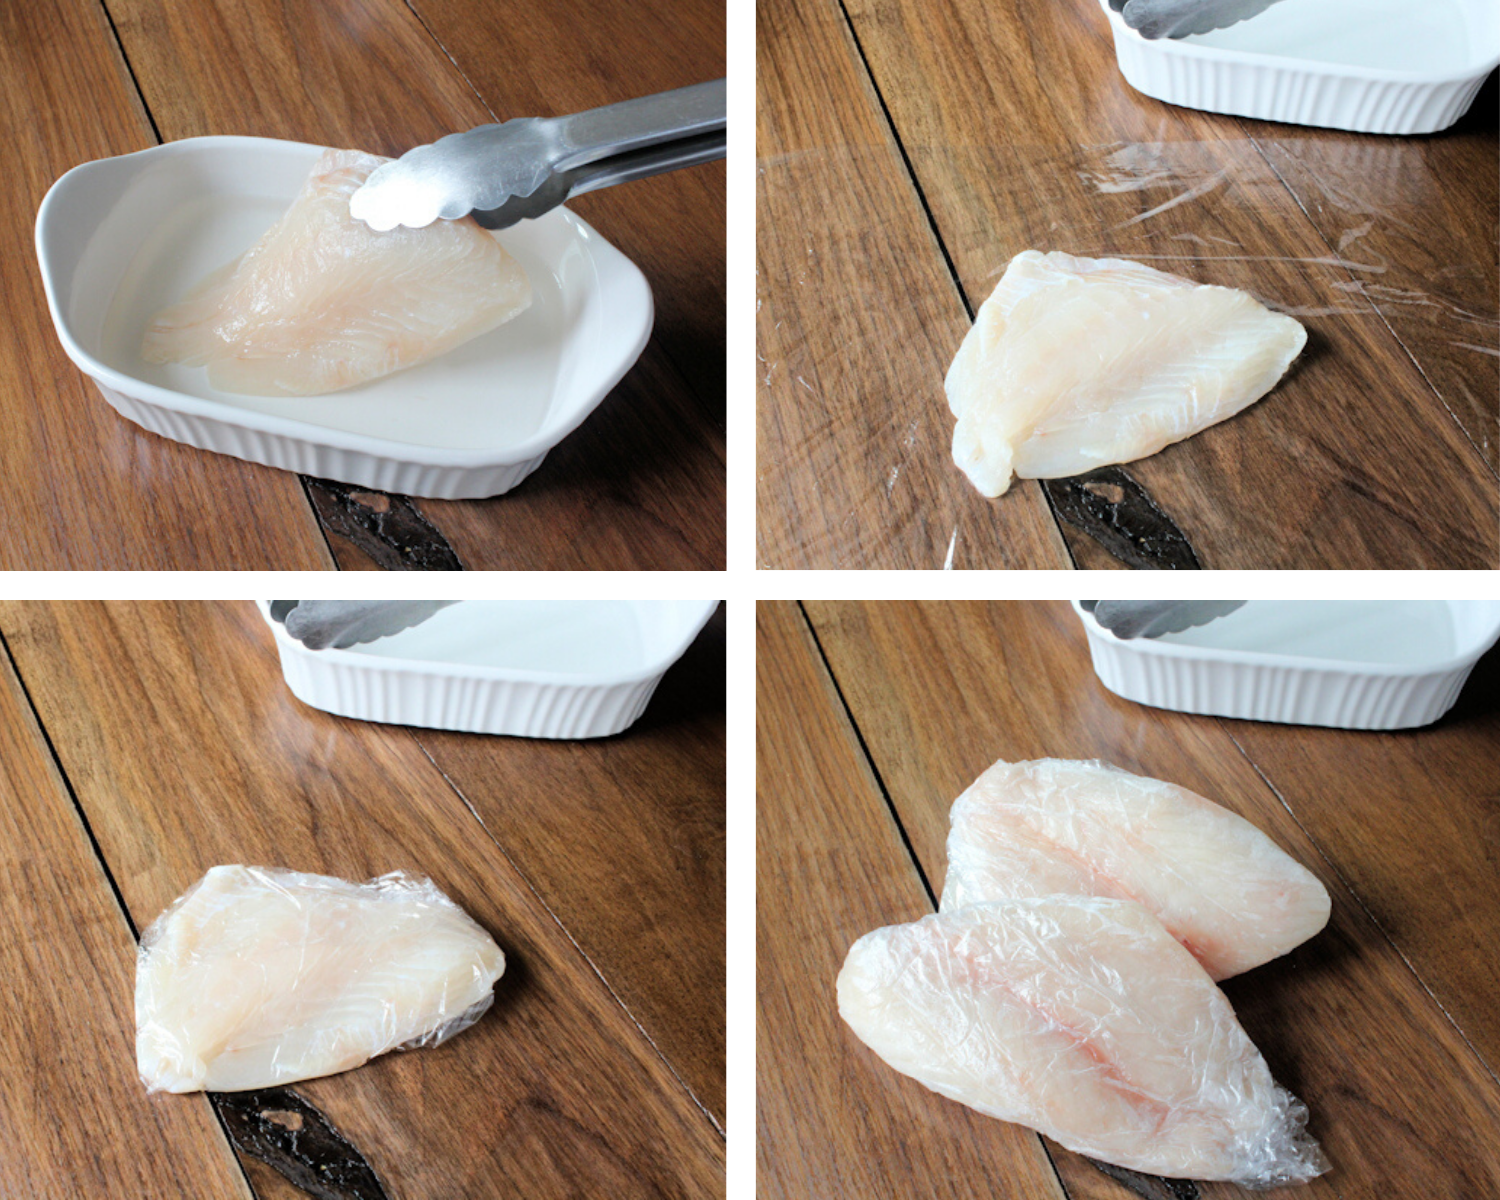 Steps to freezing finfish